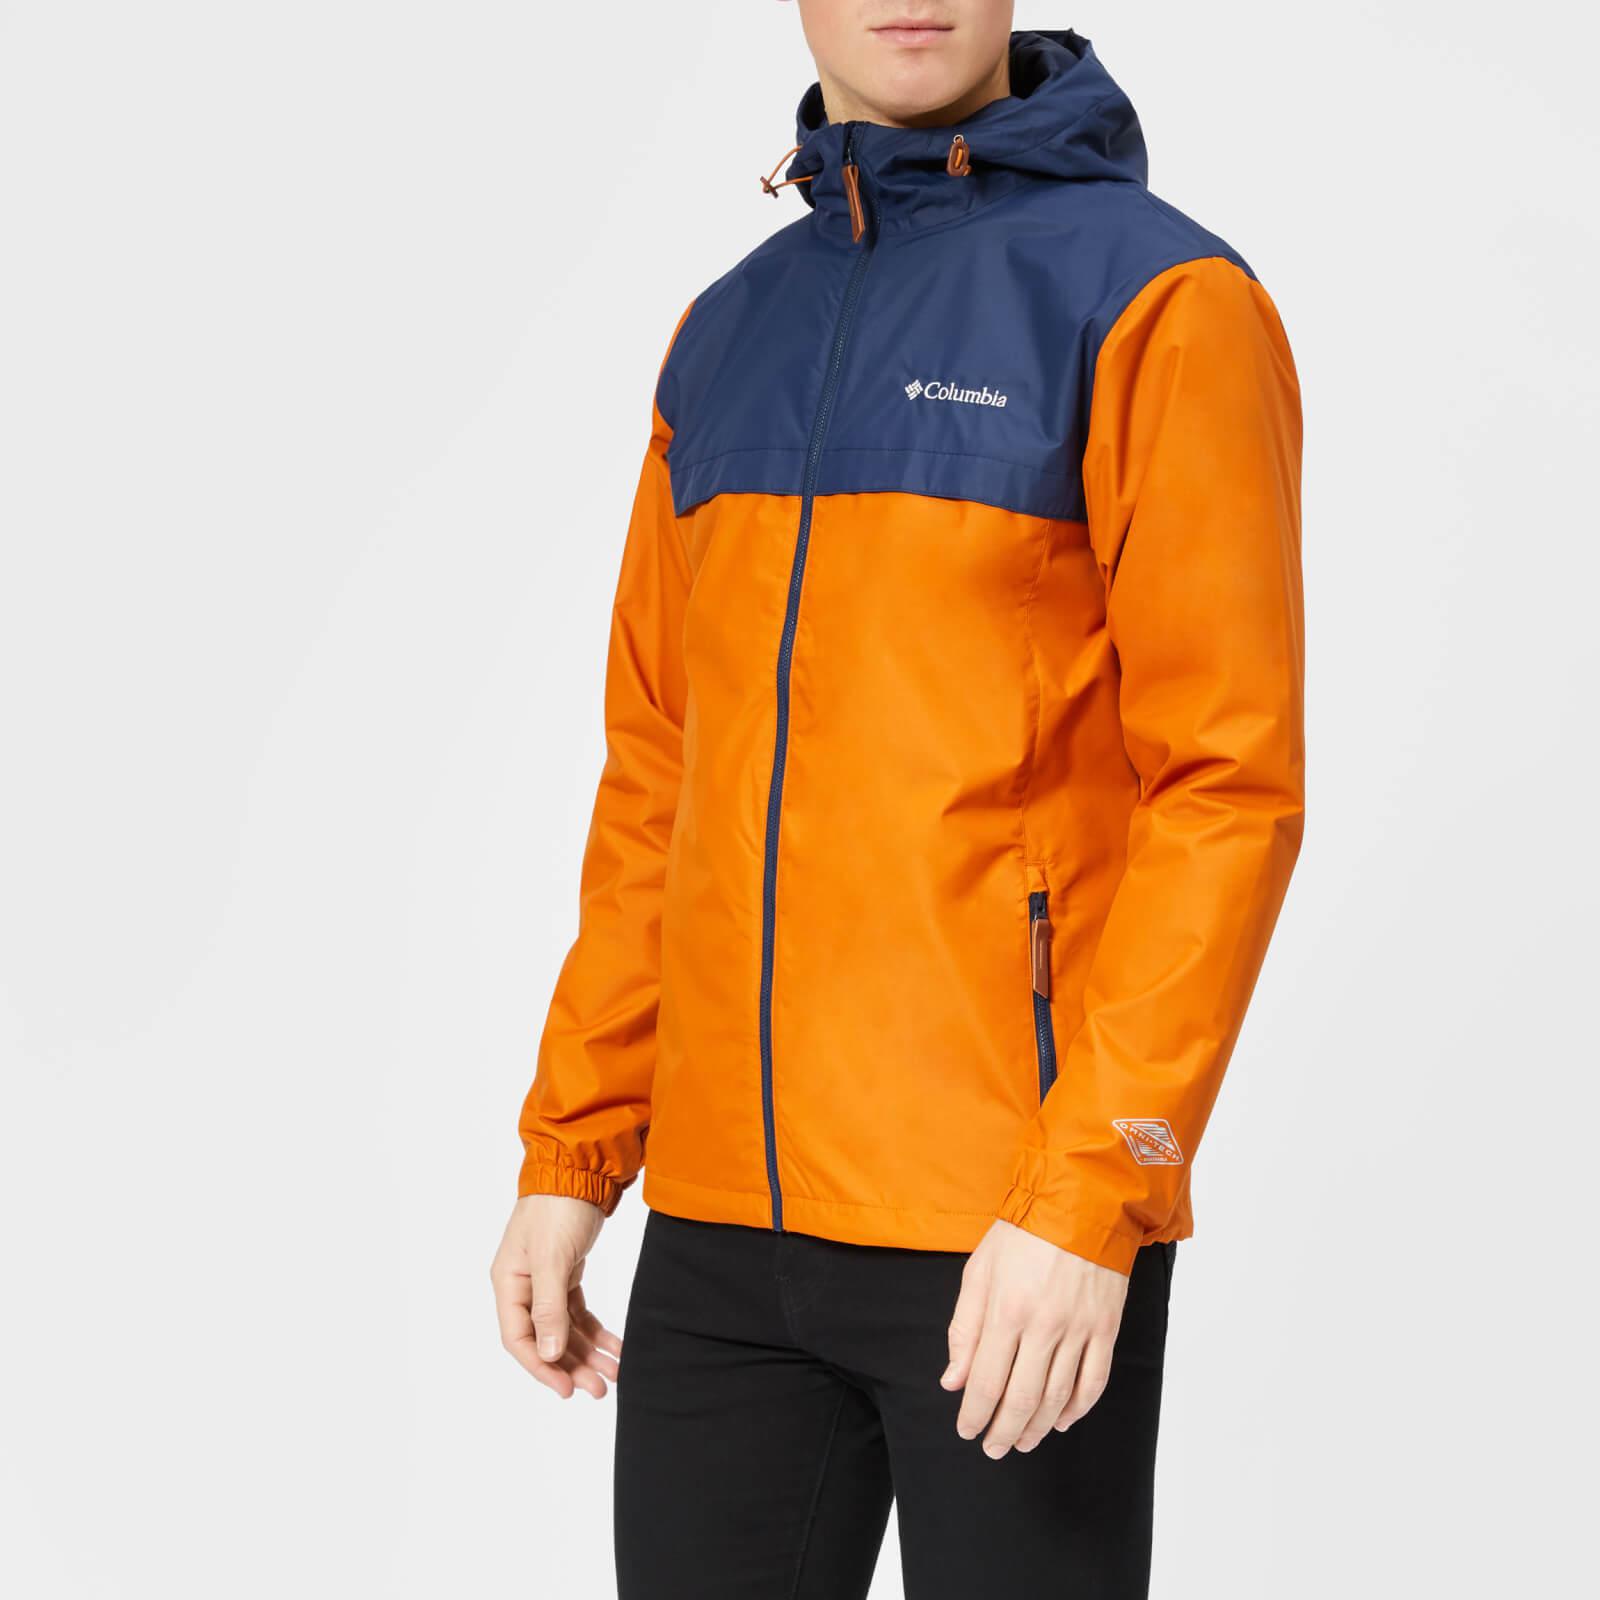 columbia jacket orange